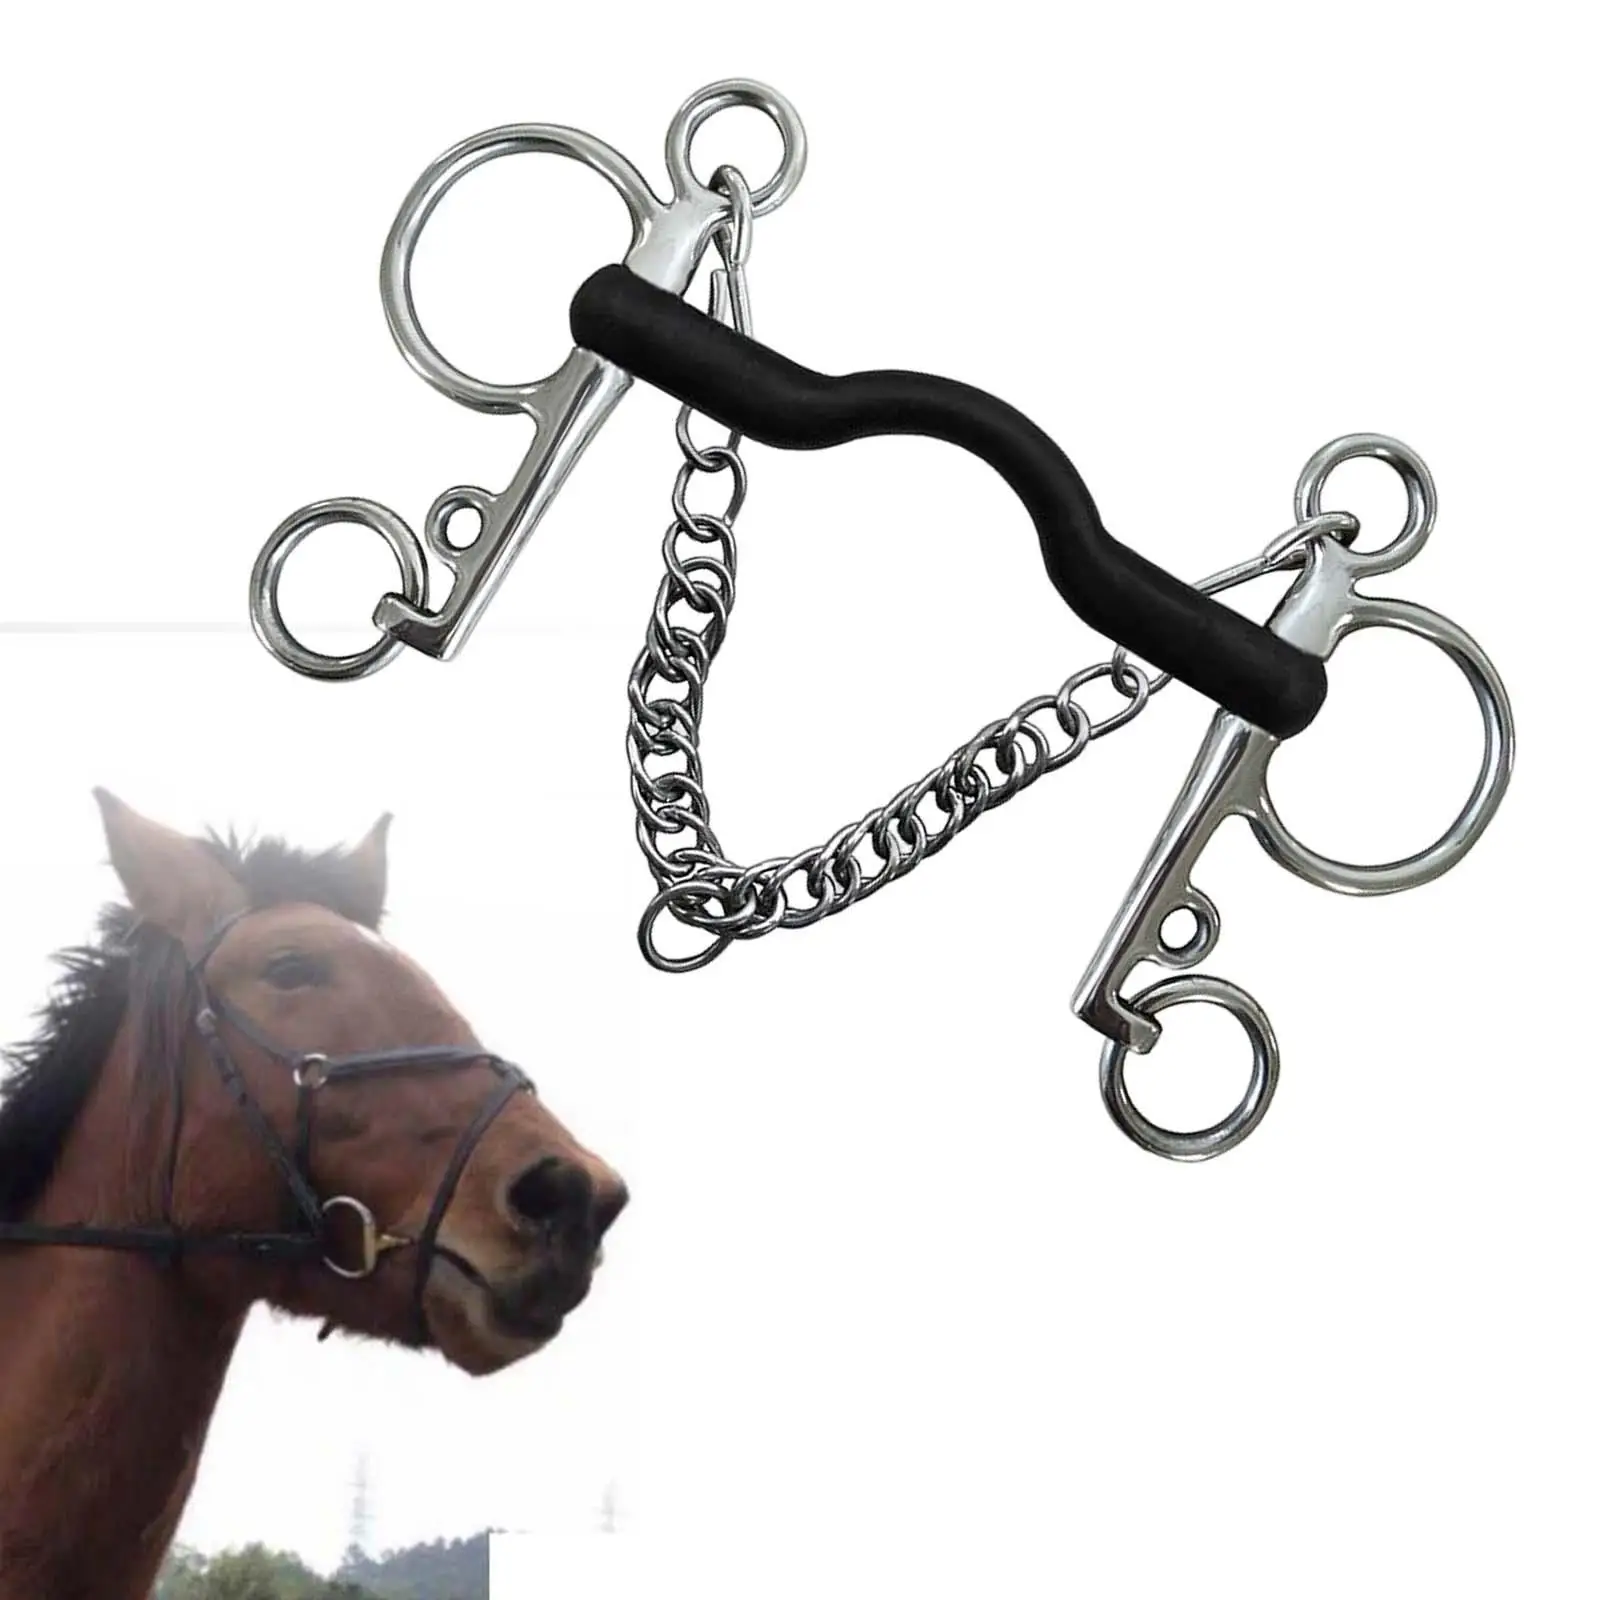 Metal, Mouth W/Curb Hooks Chain, Harness, Horse Bit, Cheek for Training Equipment Horse Bridle Performance Equestrian